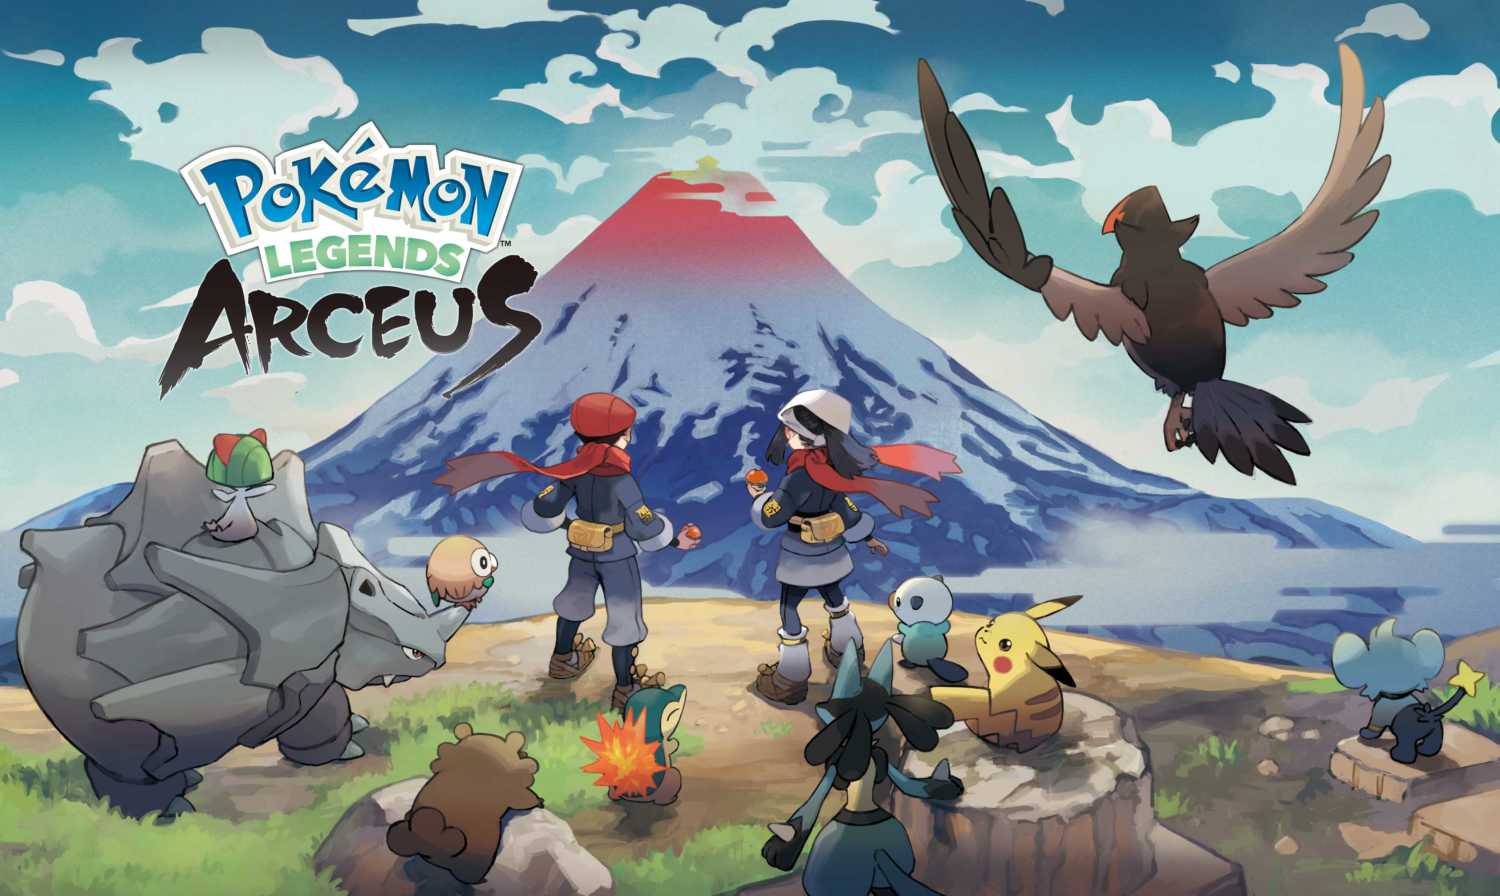 Pokemon legends arceus review